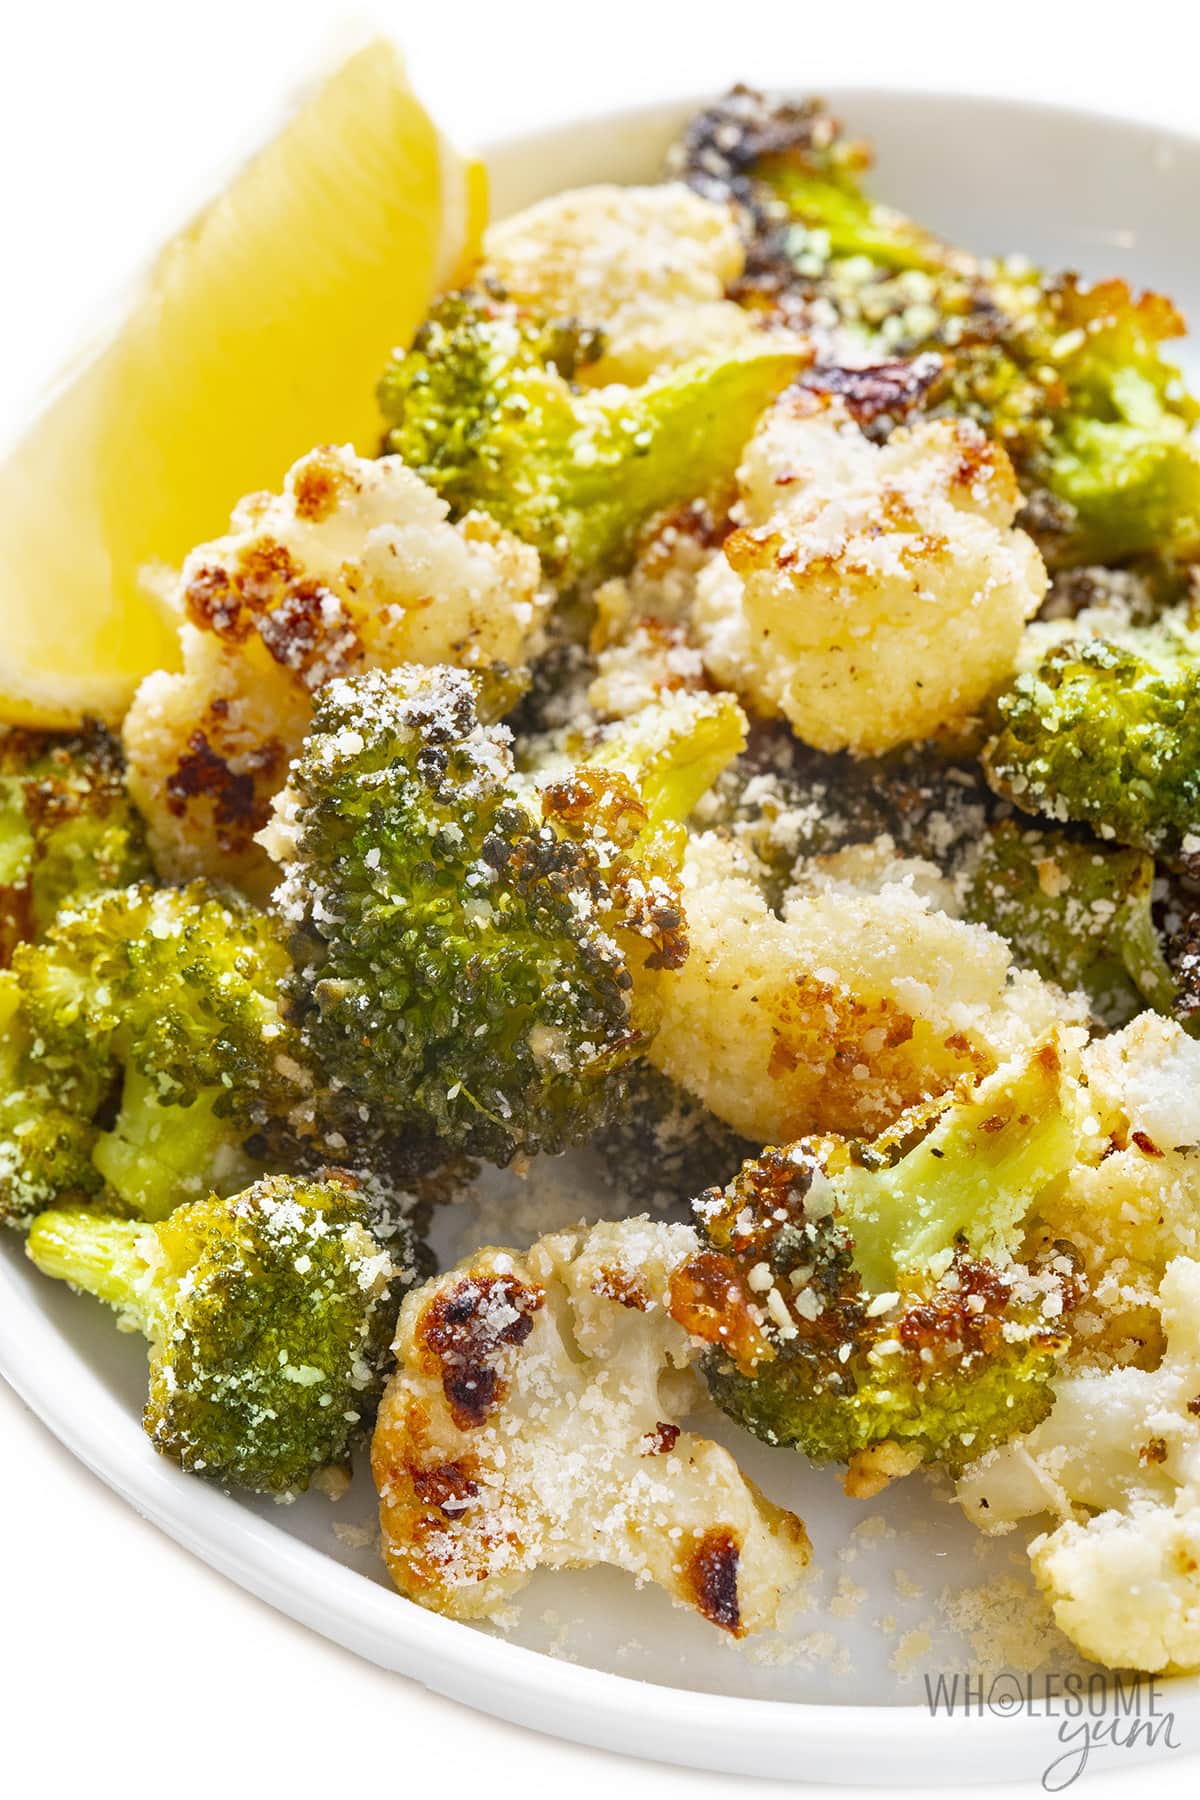 Roasted broccoli and cauliflower on a plate.